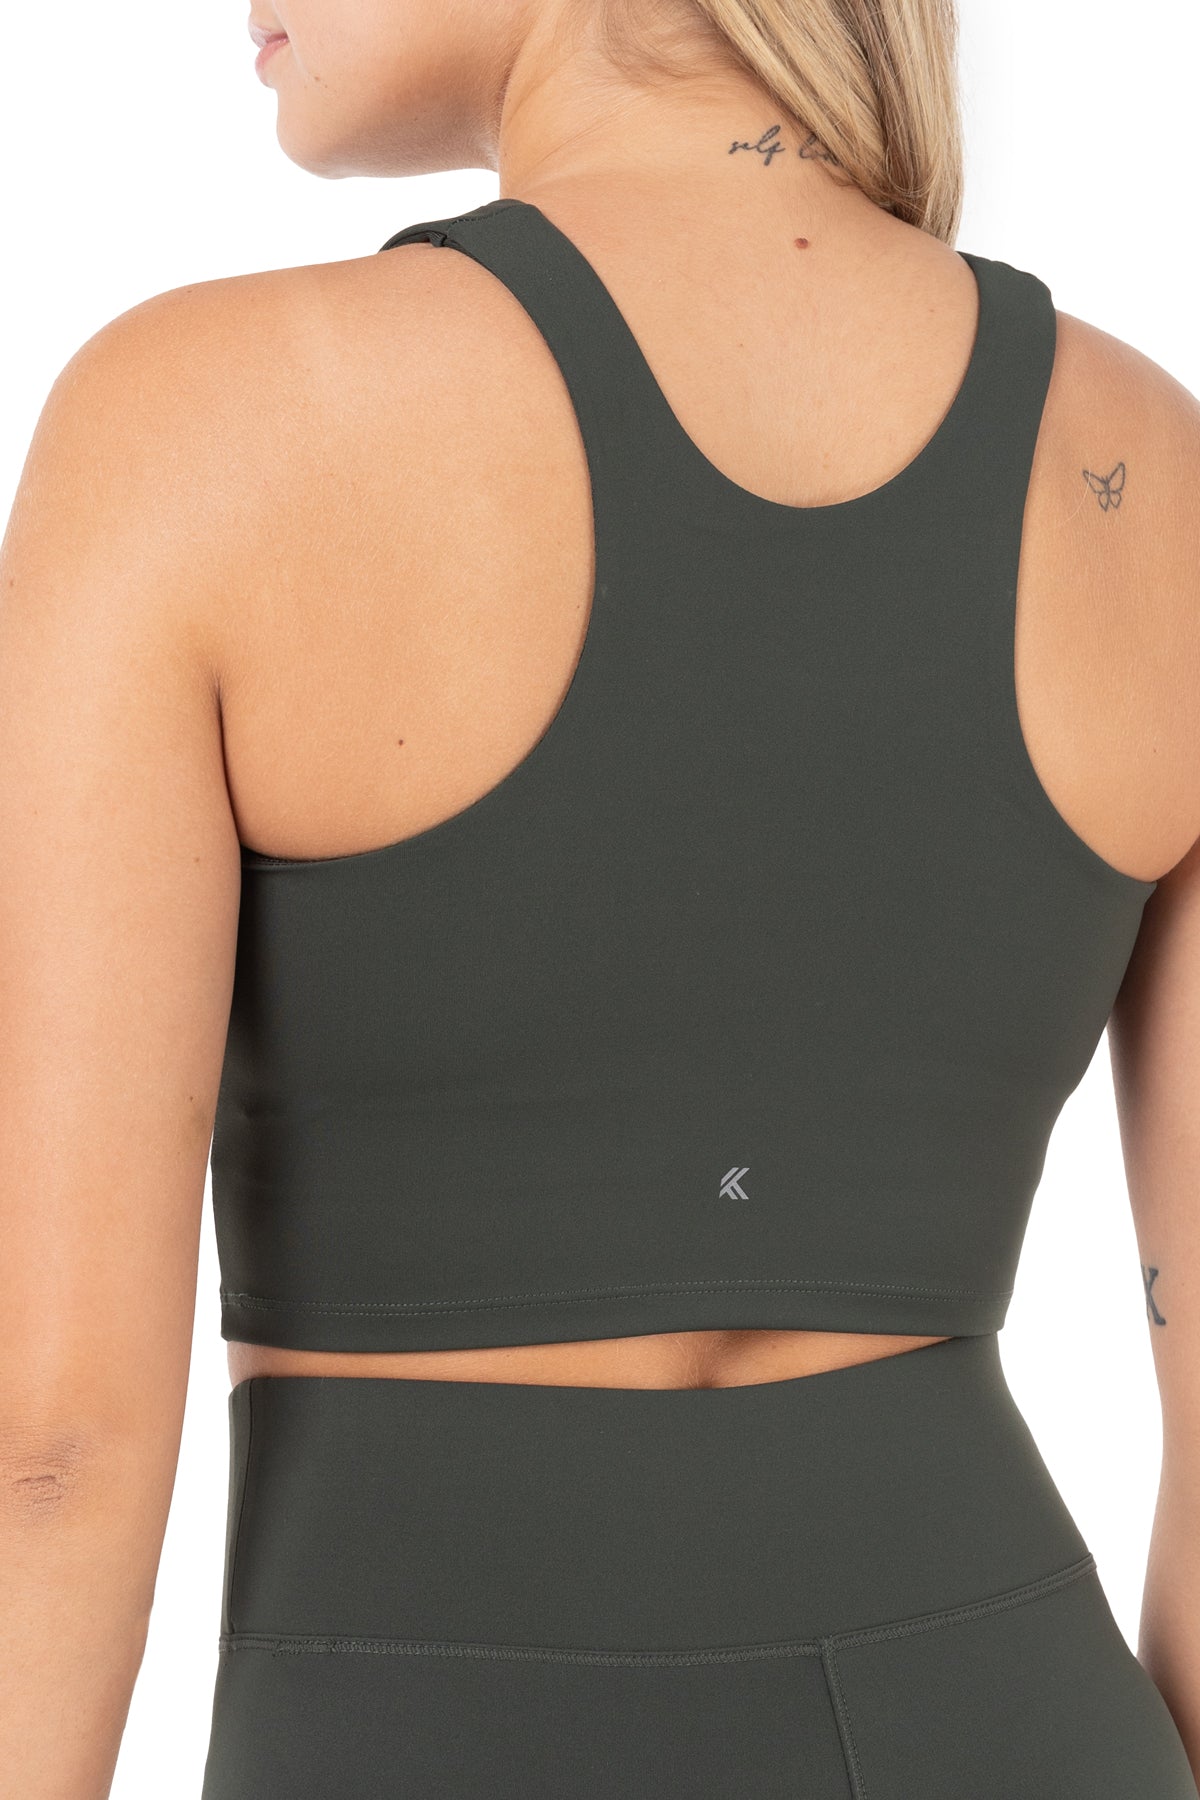 Kyodan black sports bra Size XS - $14 (36% Off Retail) - From meeka